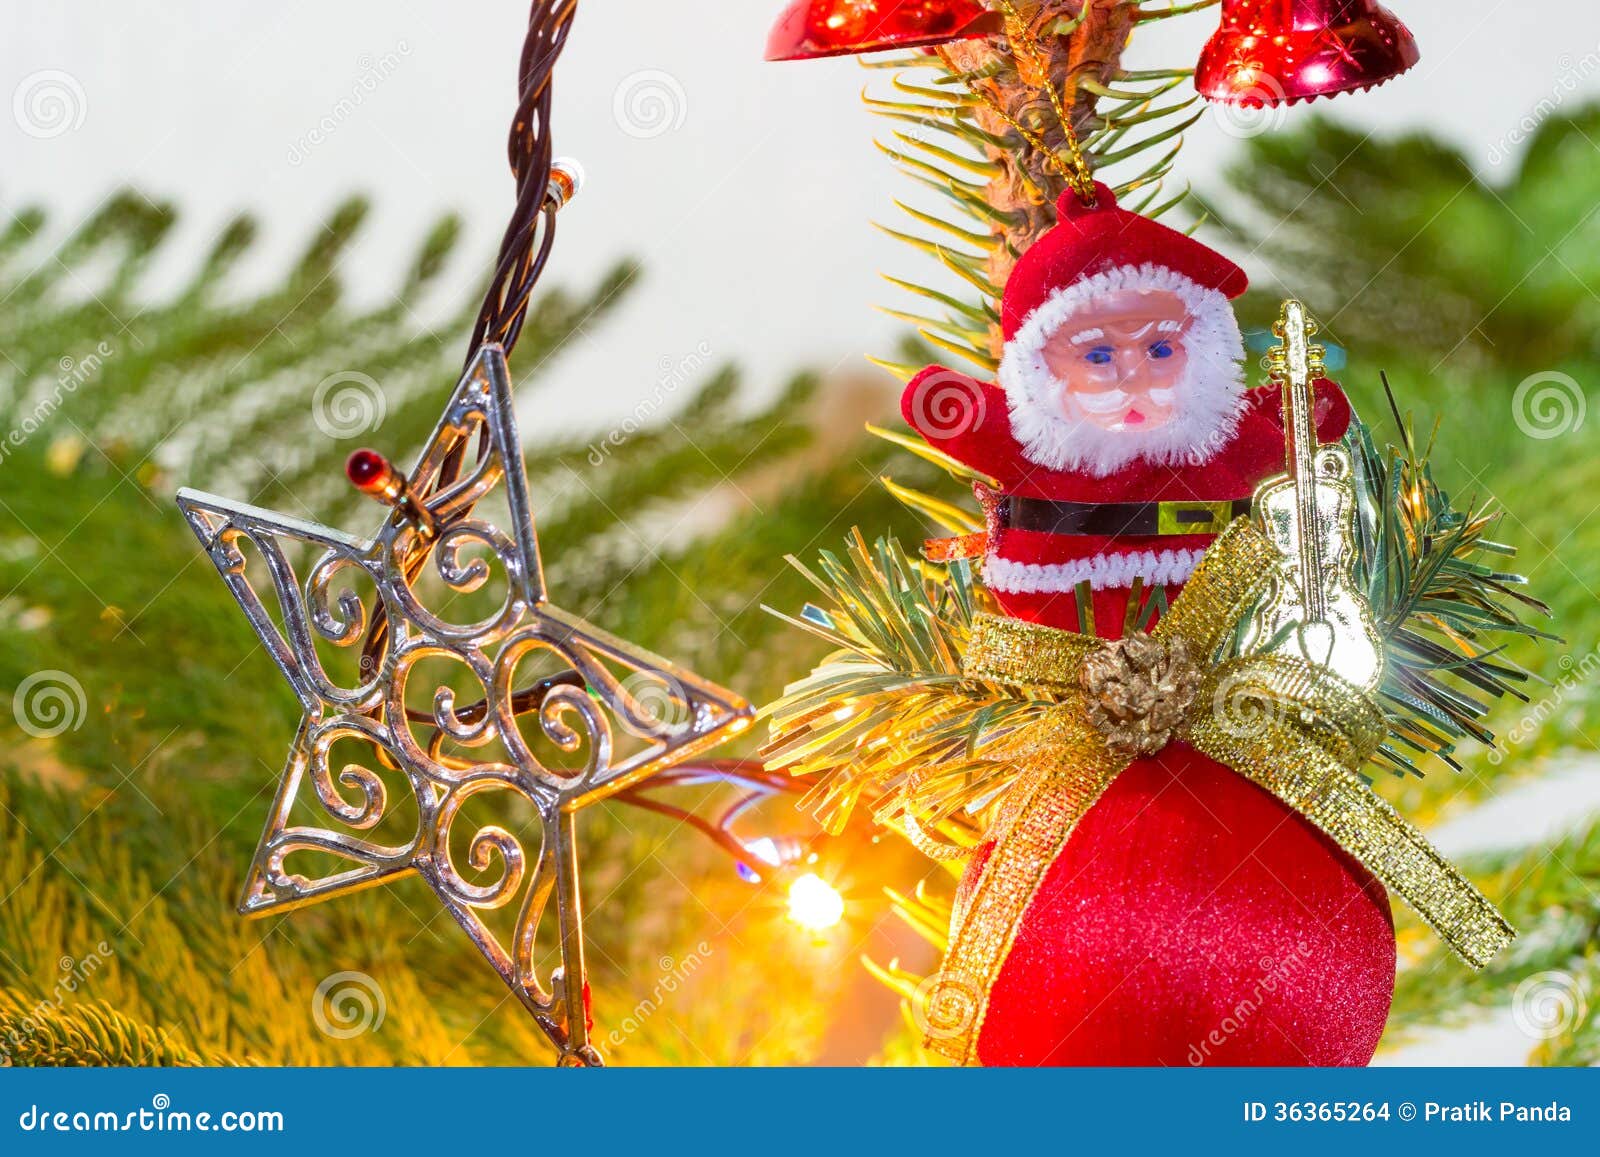 Christmas tree stock photo. Image of strip, bunting, bells - 36365264